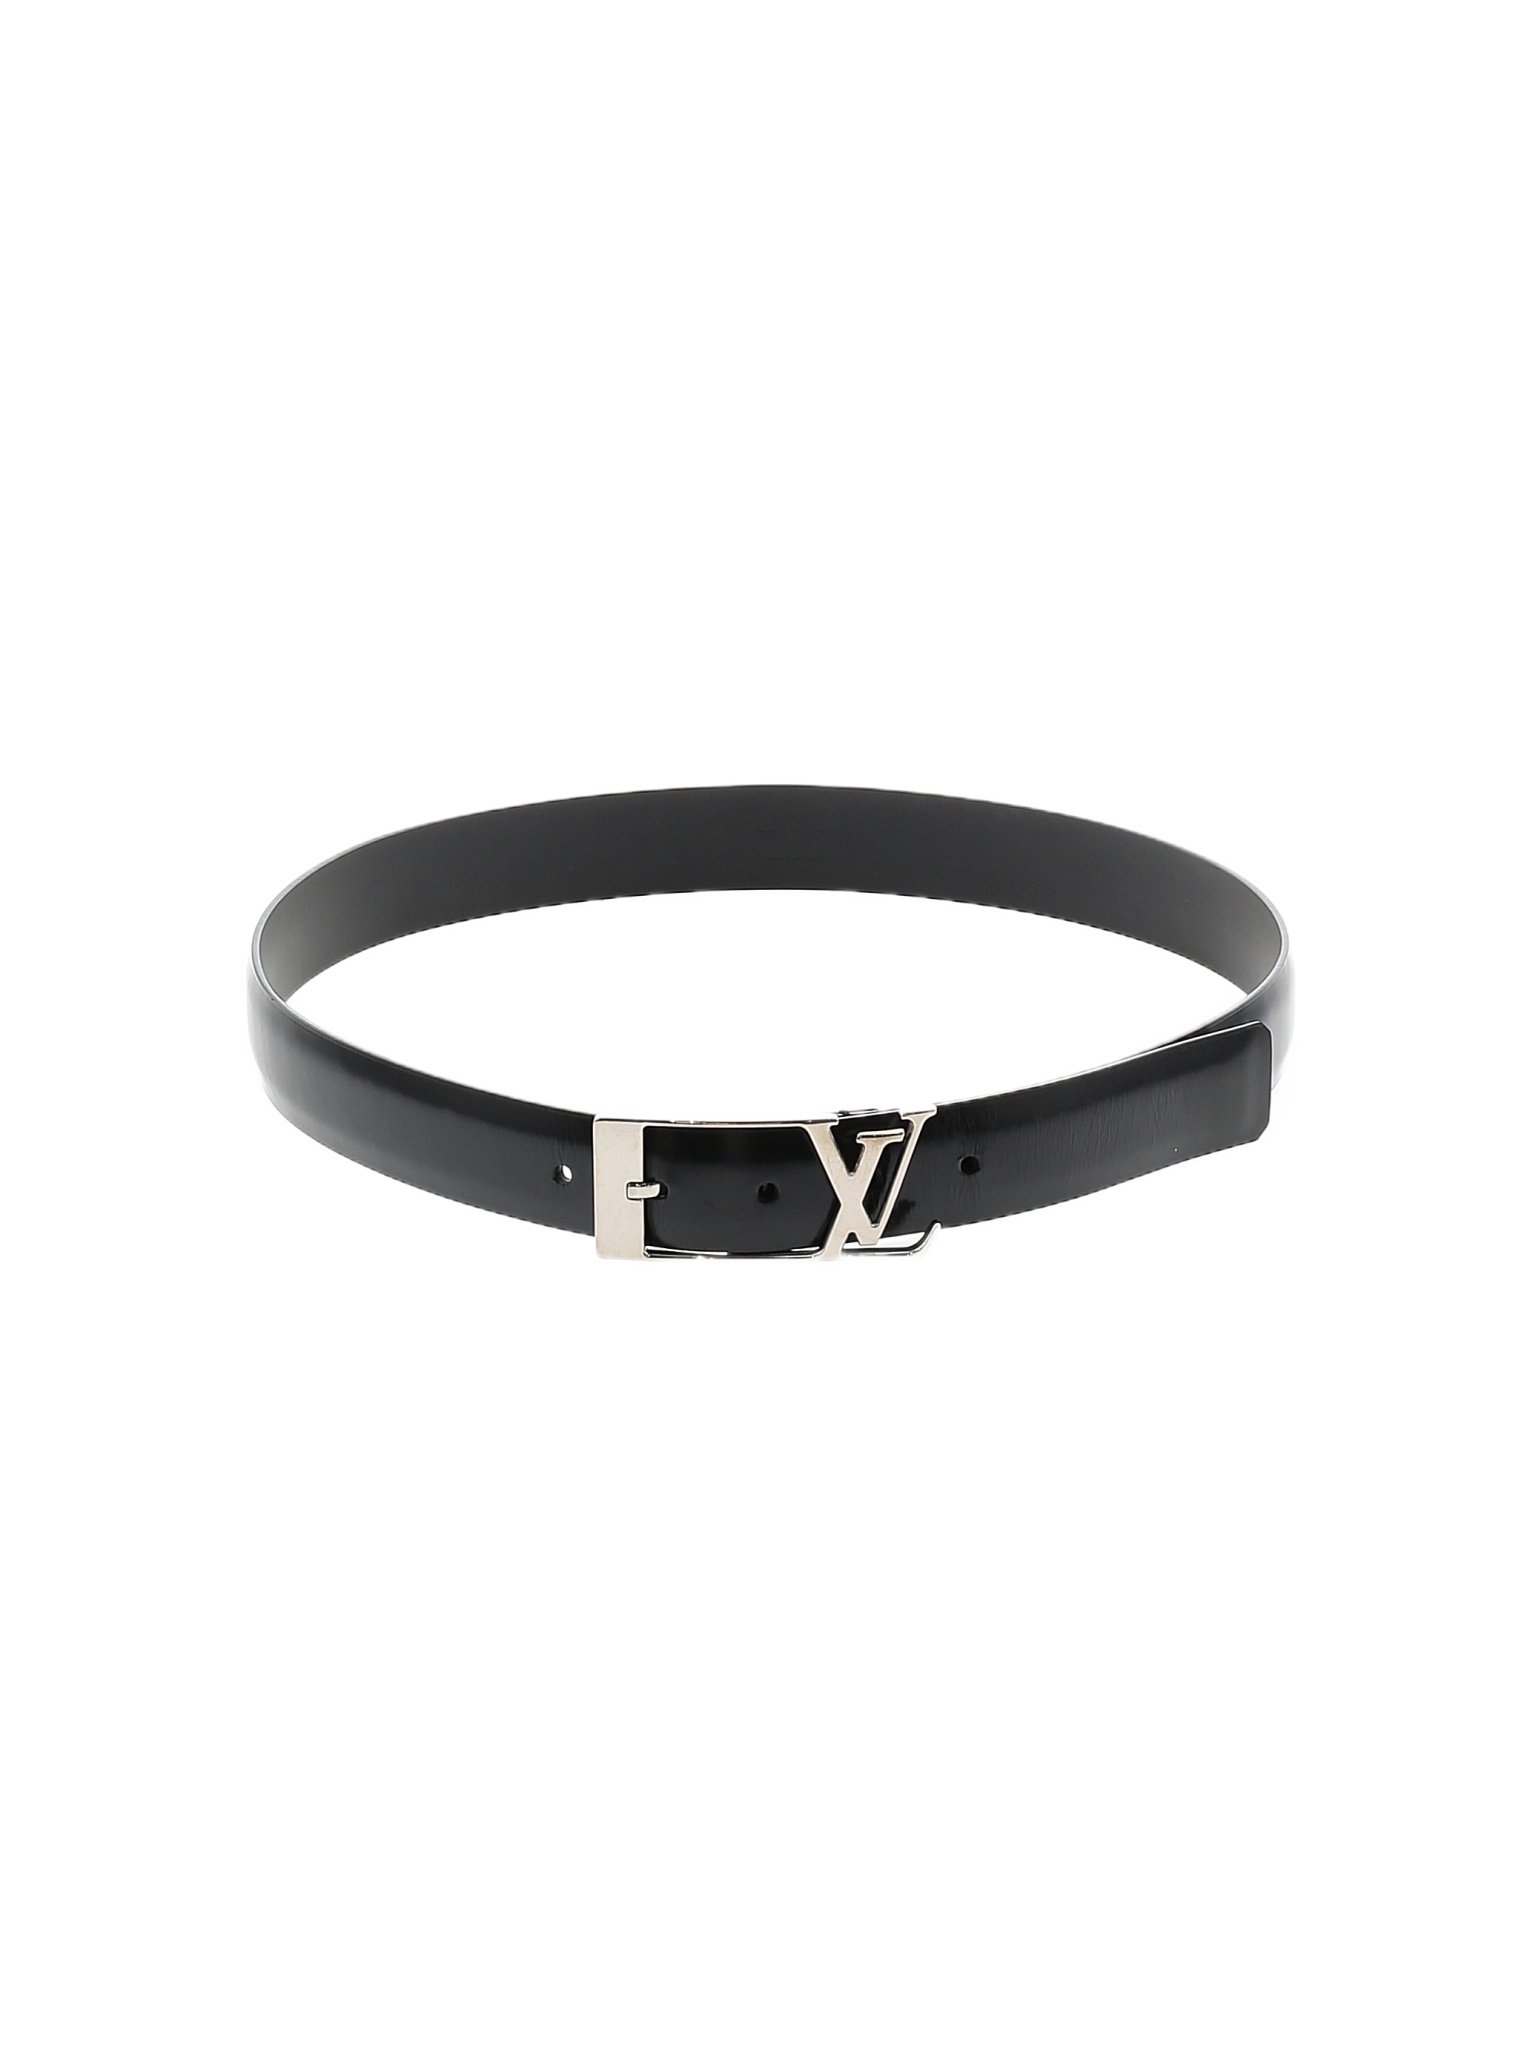 Louis Vuitton Solid Black Leather Ceinture Anagram LV Pin Buckle Belt Size  34 (FR) - 47% off